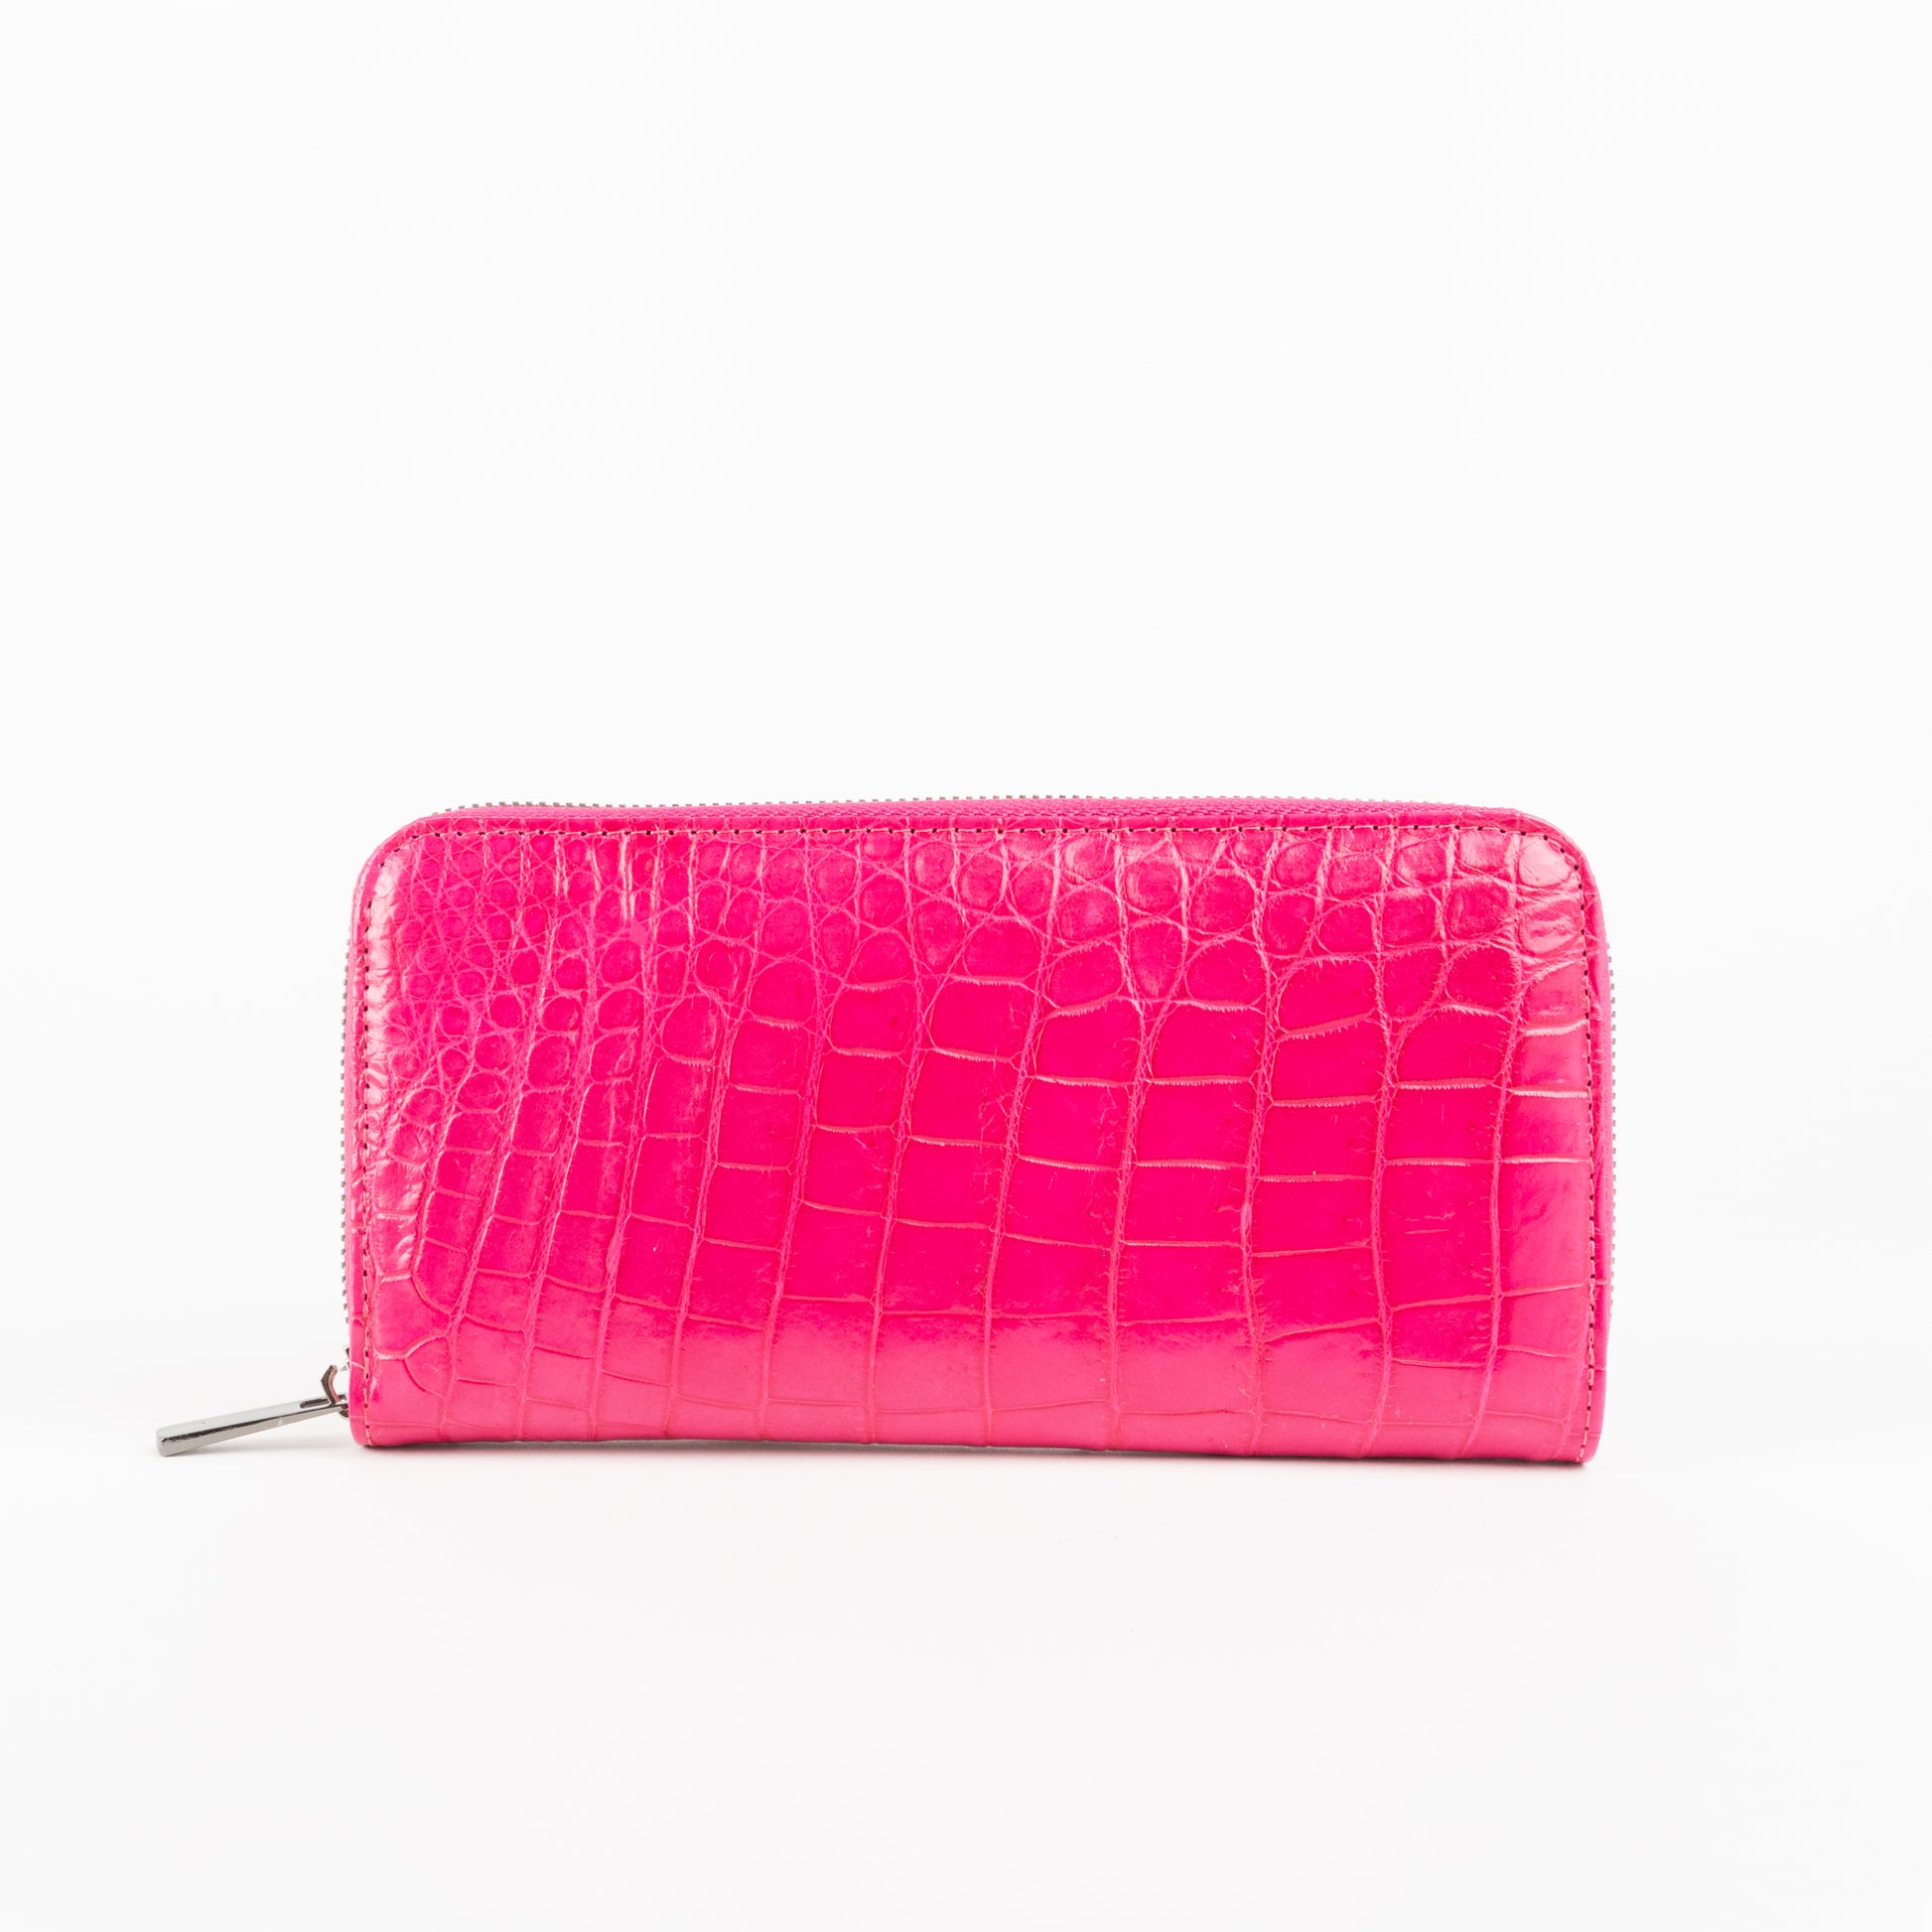 Sherrill bros pink crocodile wallet for women 